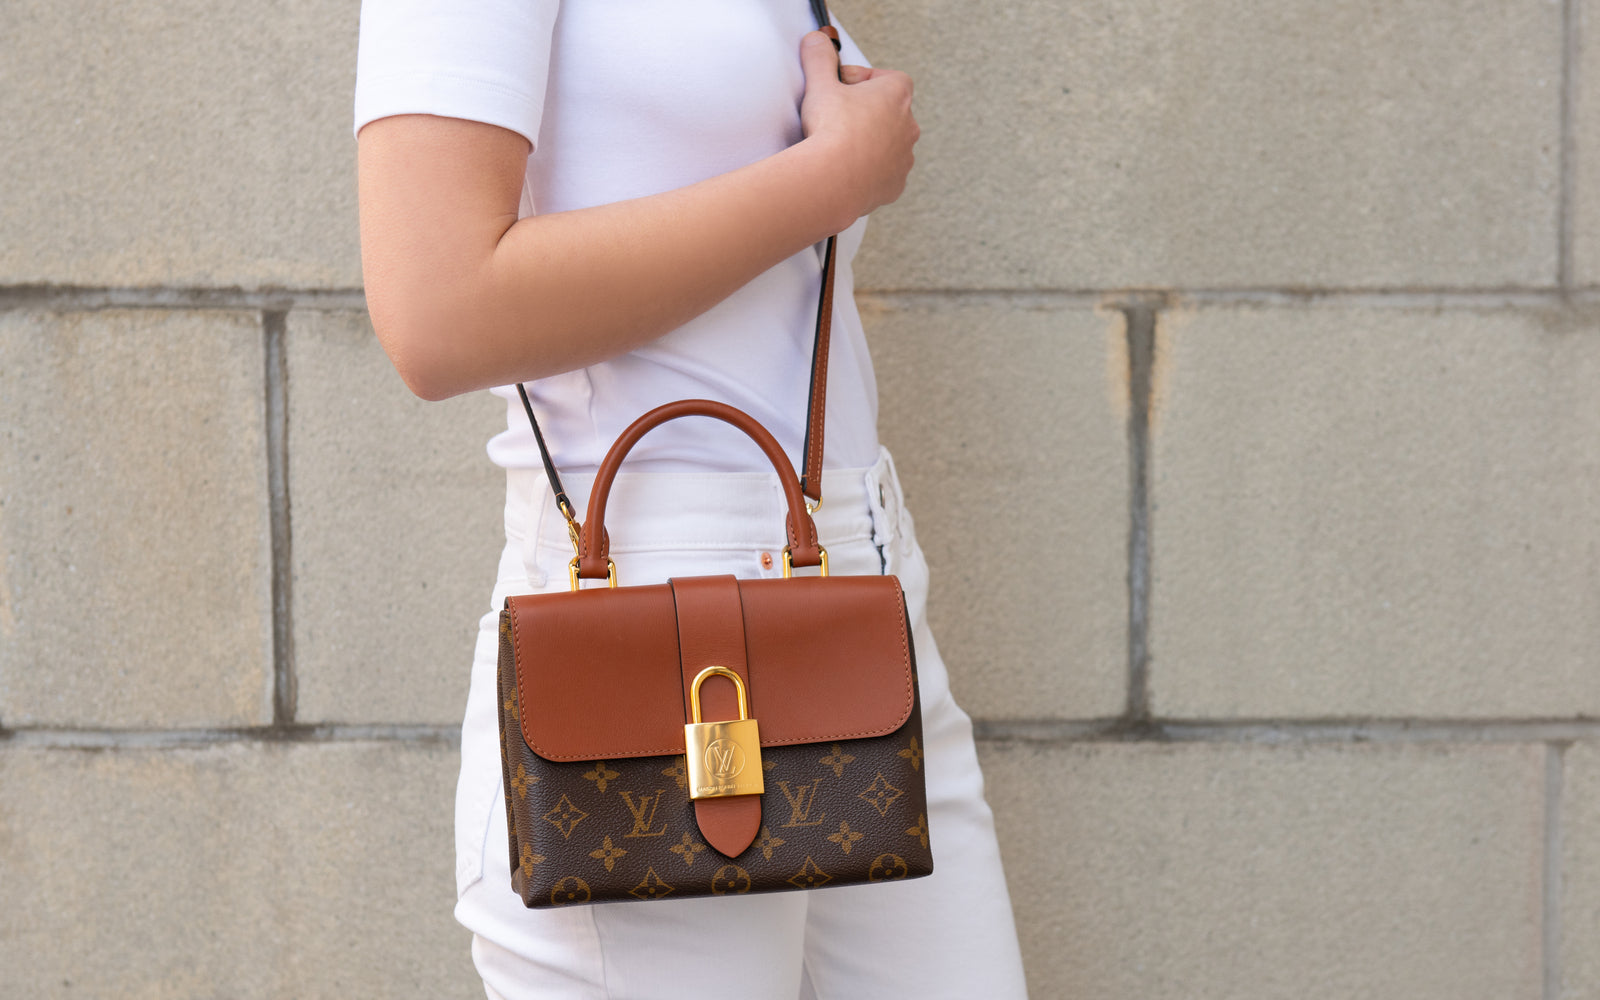 Discover incredible authentic preloved designer handbag deals today!